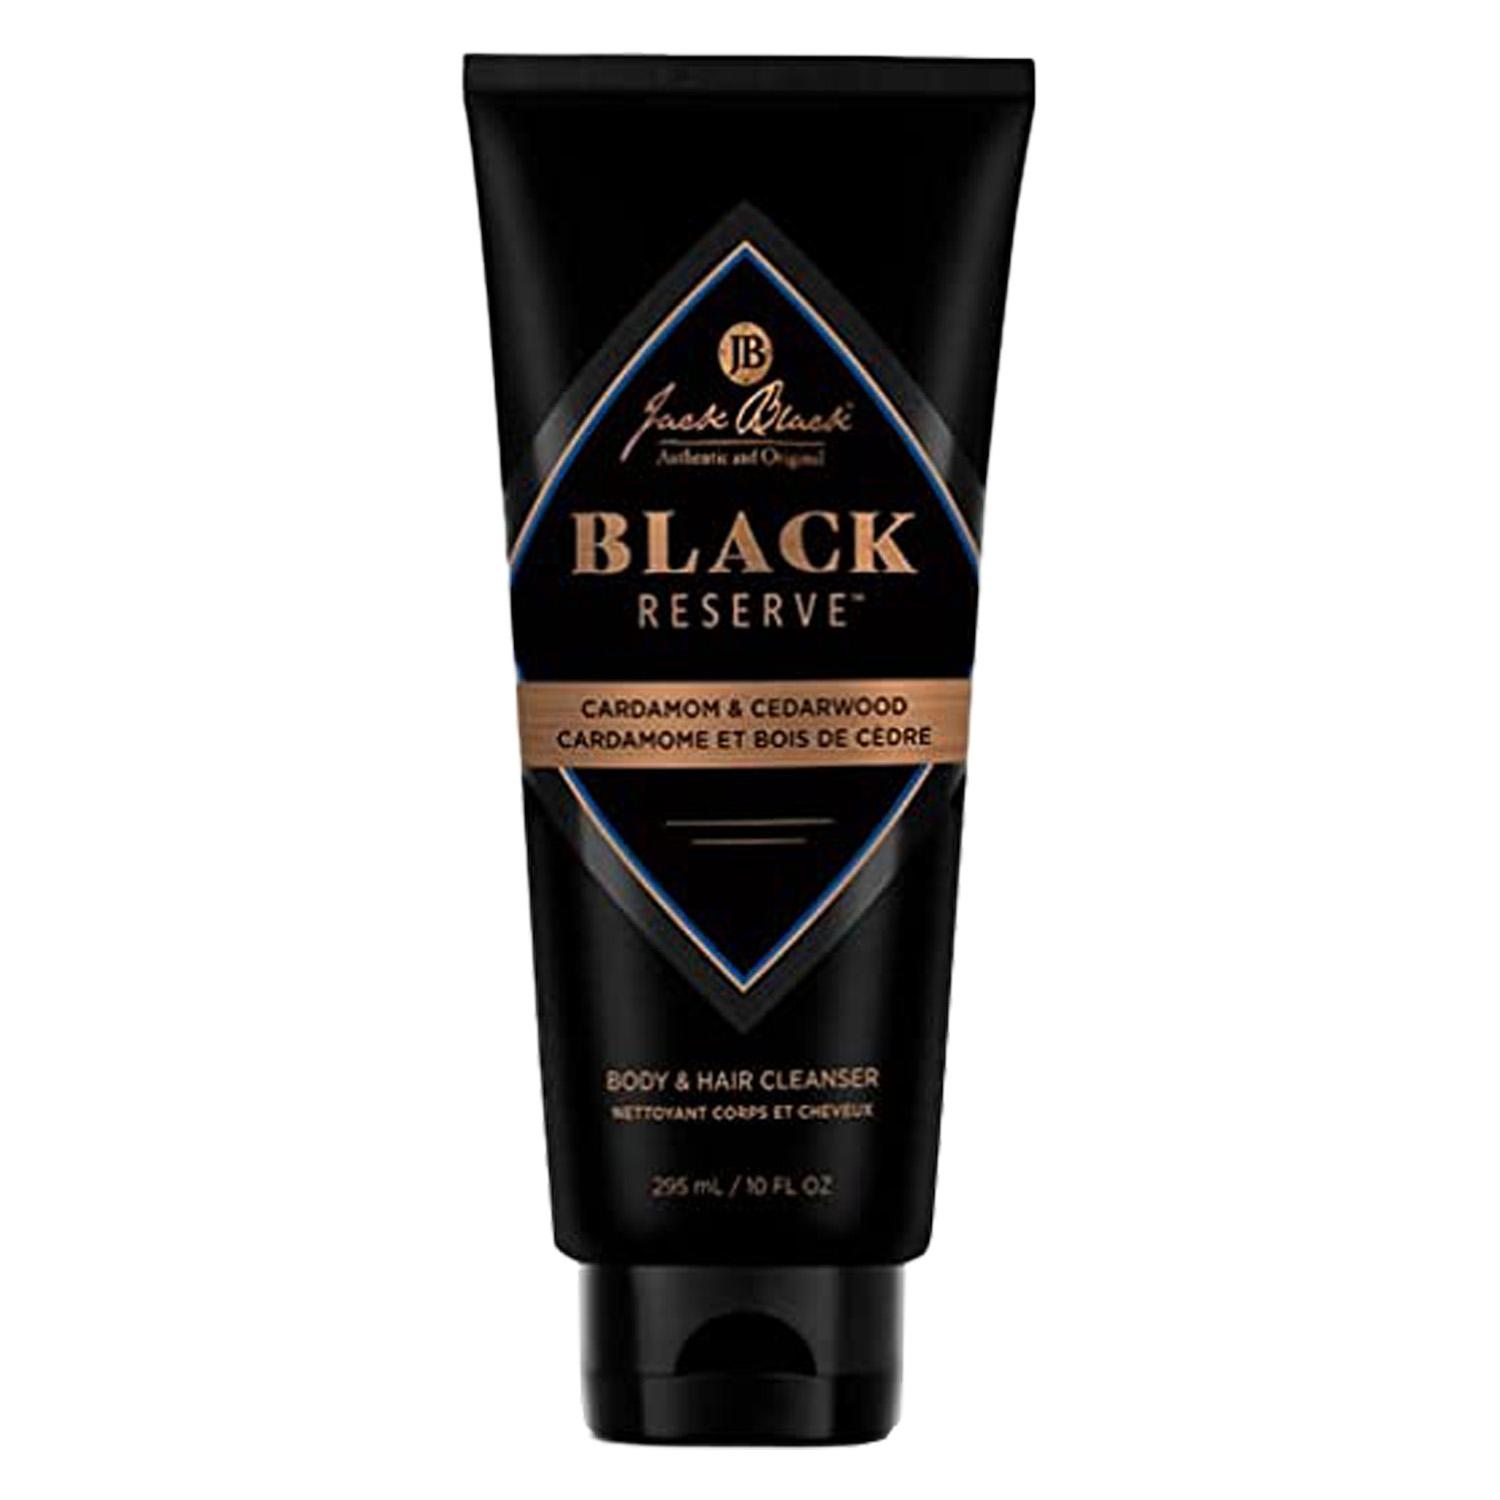 Black Reserve - Body & Hair Cleanser